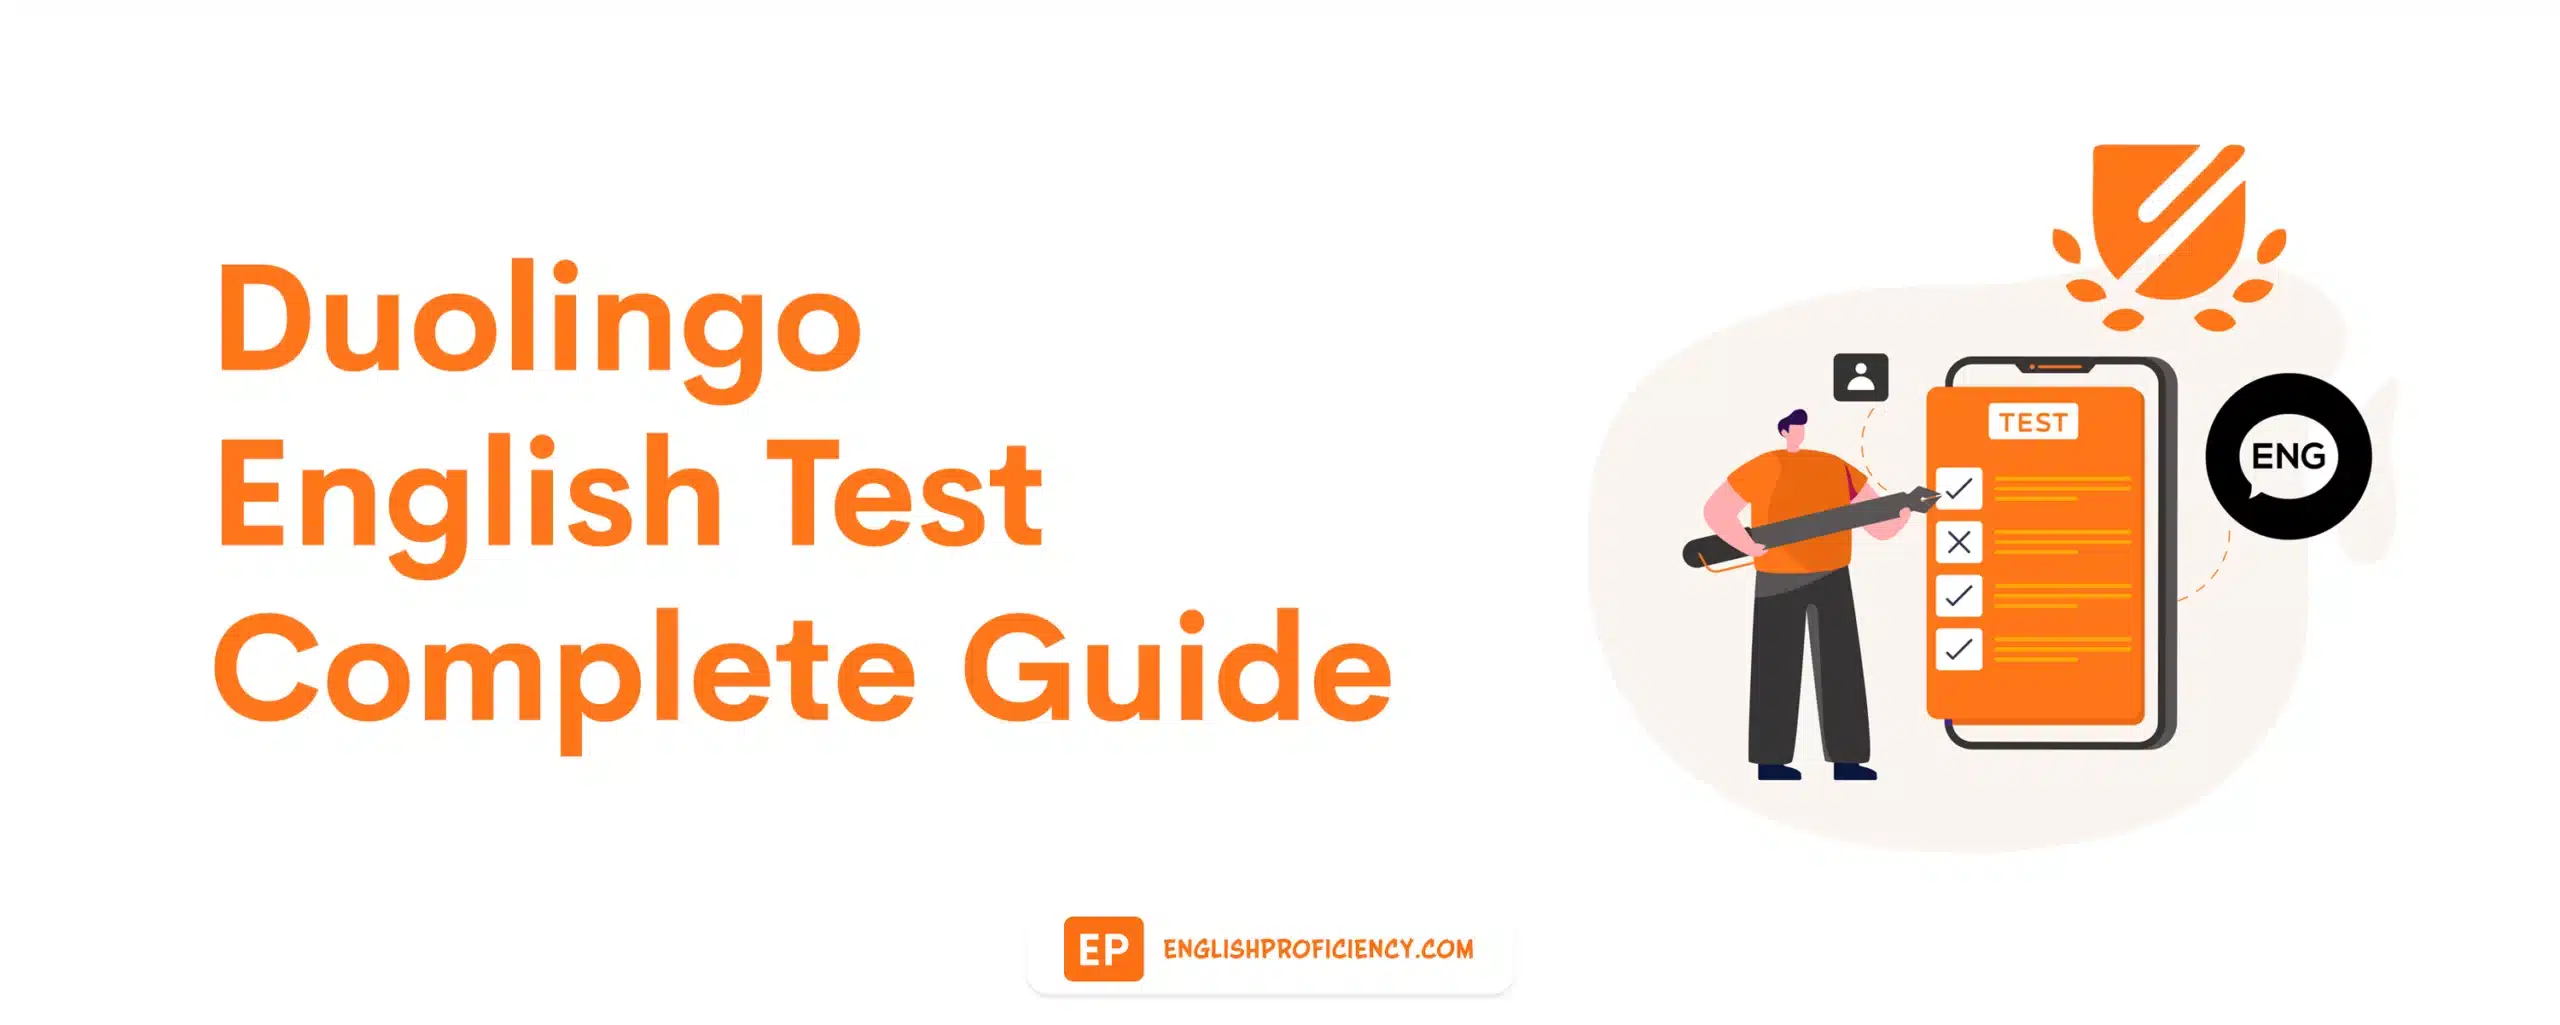 Duolingo English Test Complete Guide